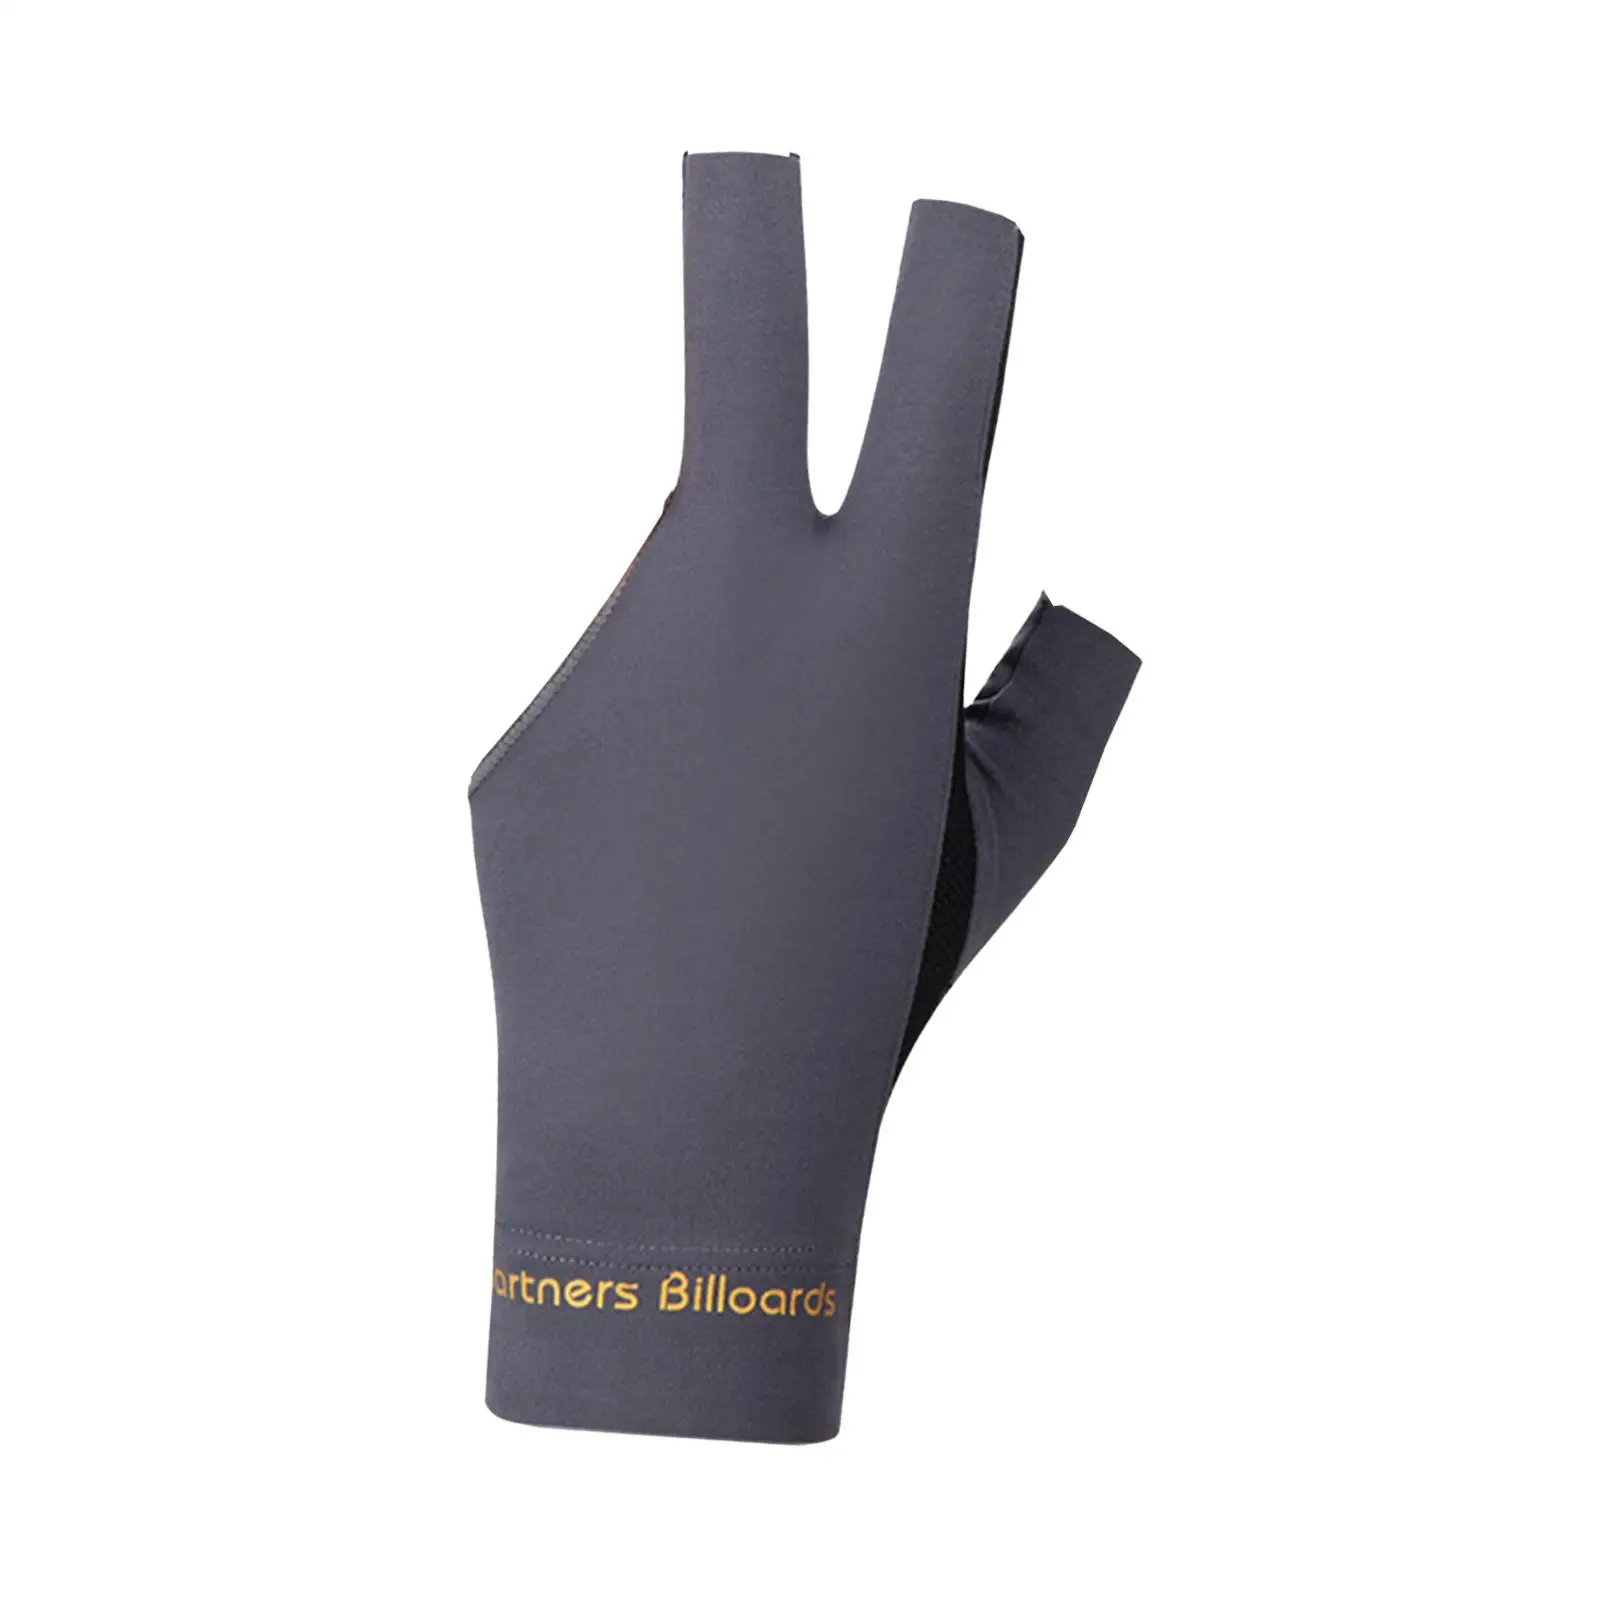 3 Fingers Billiard Gloves Elastic Anti Slip Polyester Cue Accessories Pool Gloves Snooker Gloves for Women Sport Indoor game